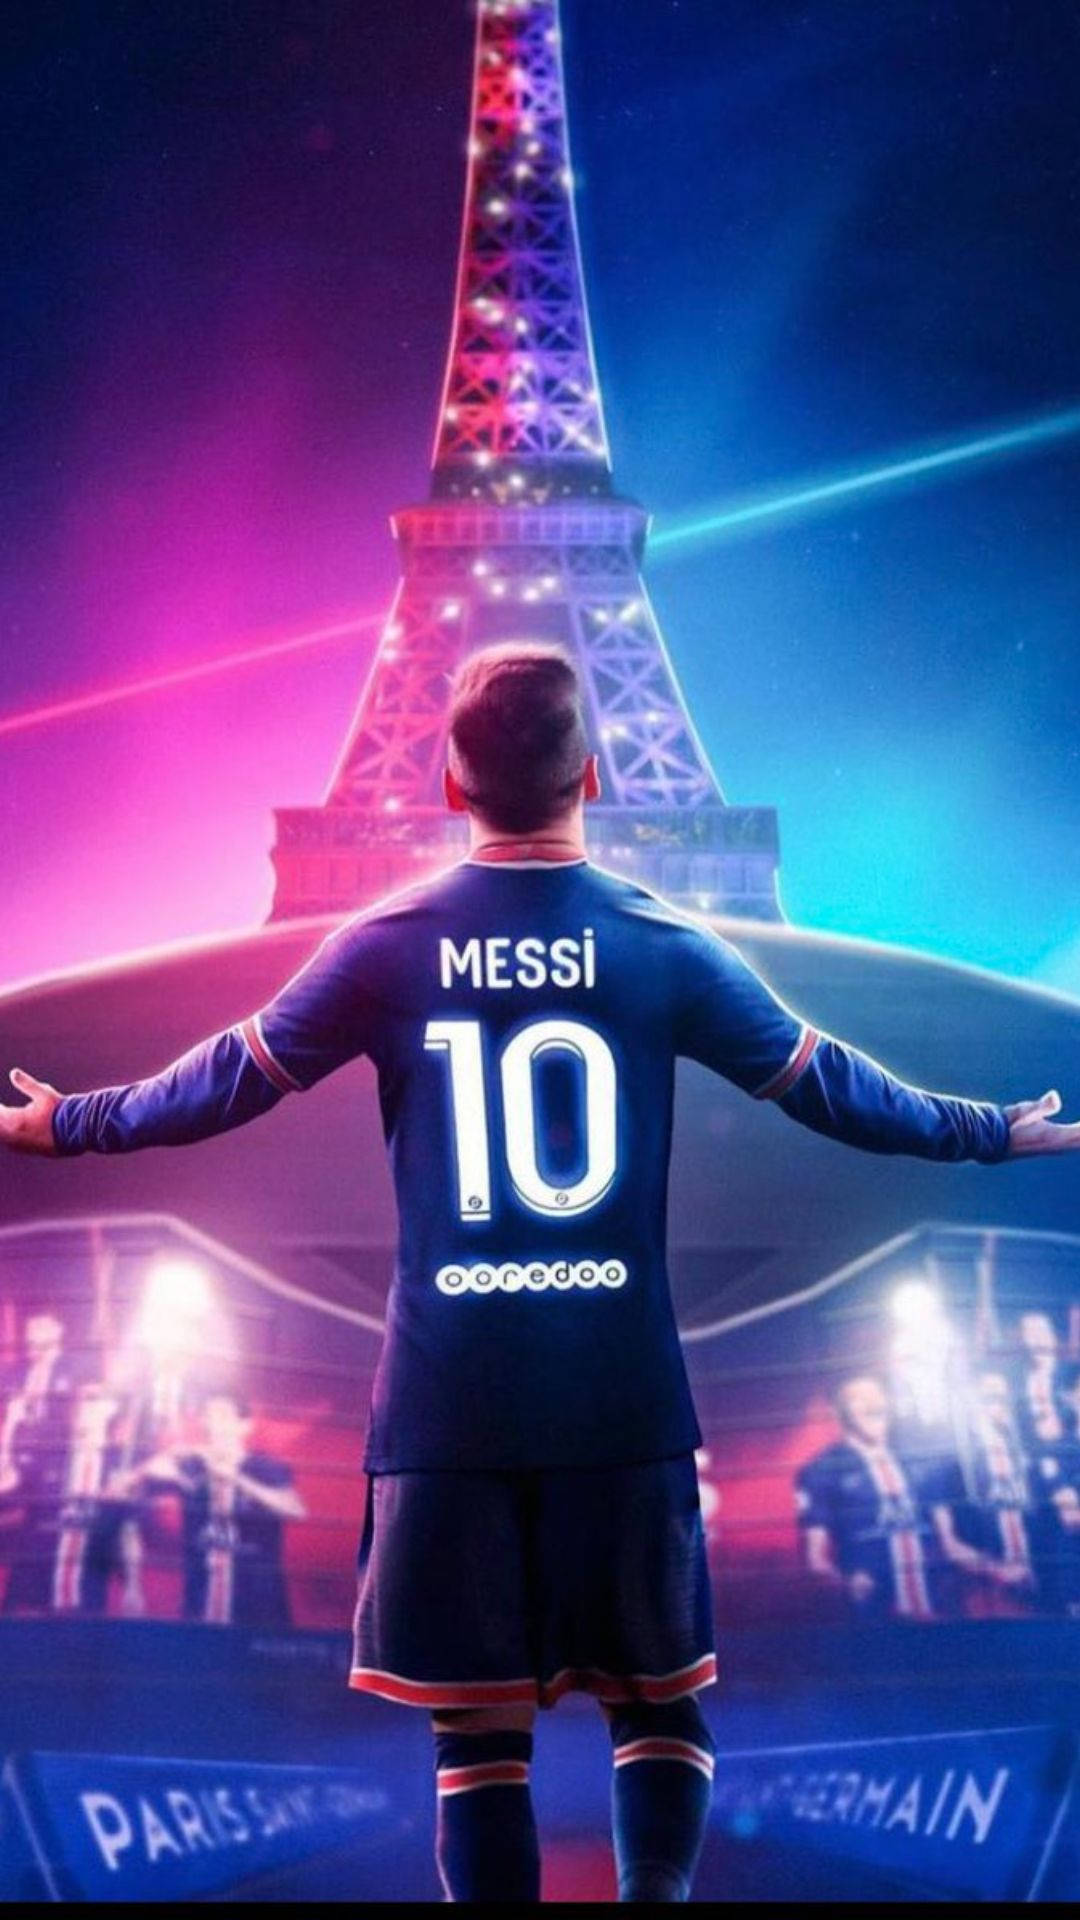 Messi Psg Eiffel Tower Background